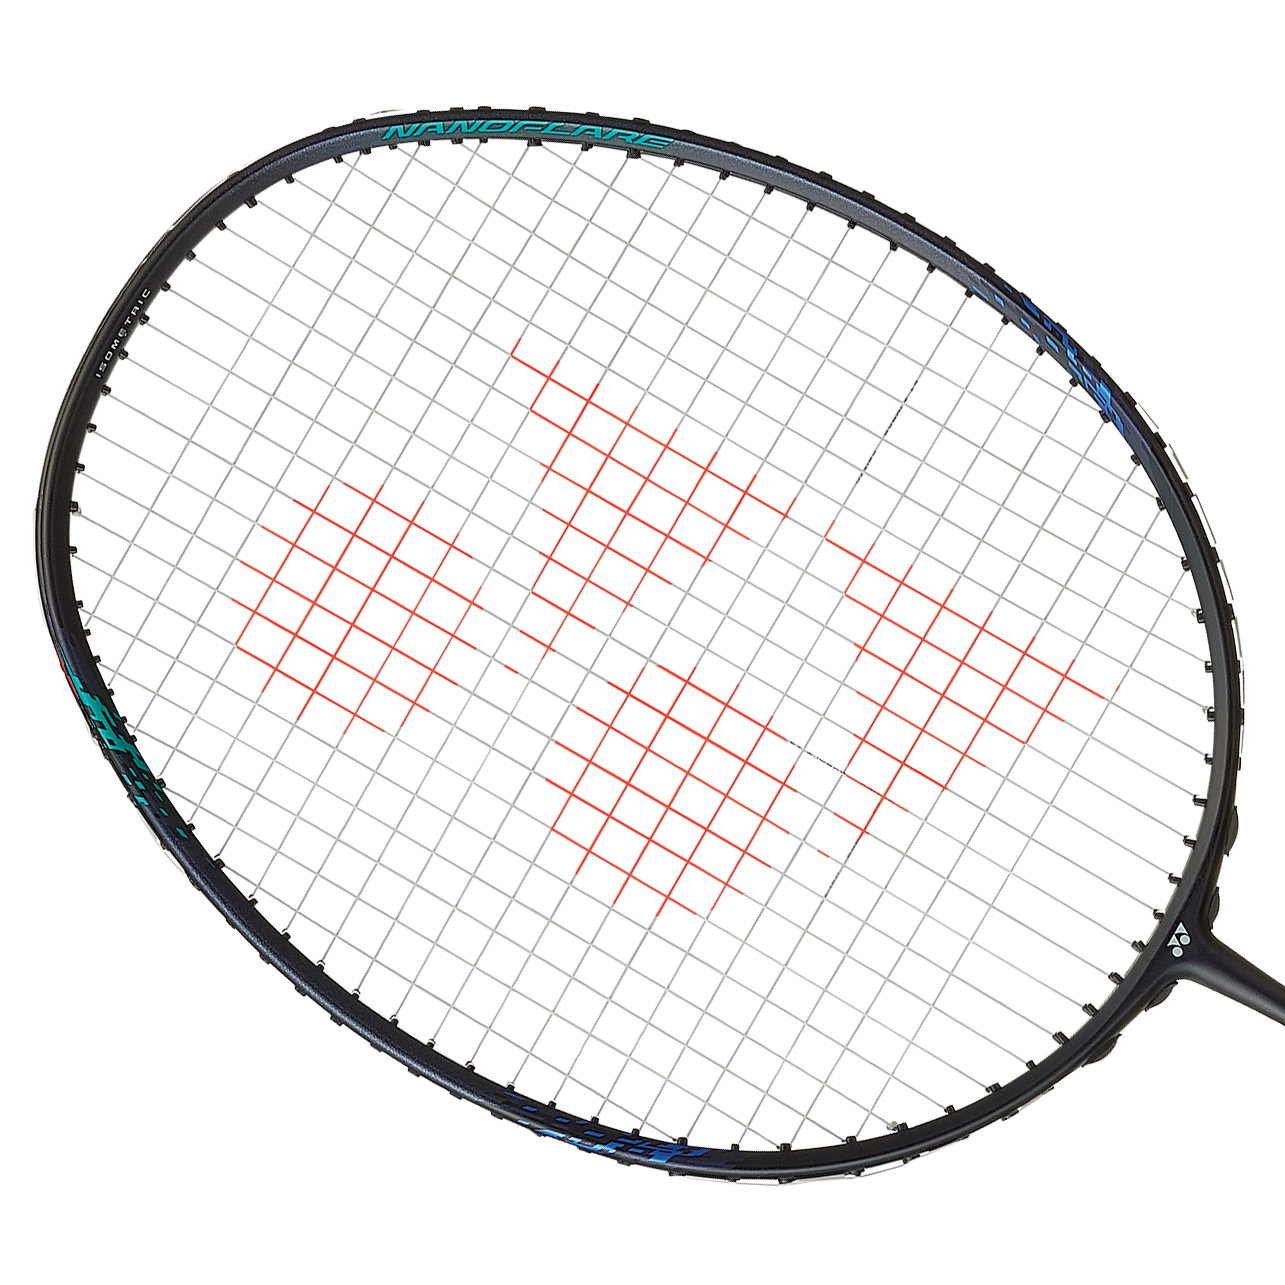 Badmintonová raketa Yonex NANOFLARE 170 LIGHT BLACK BLUE 5UG4